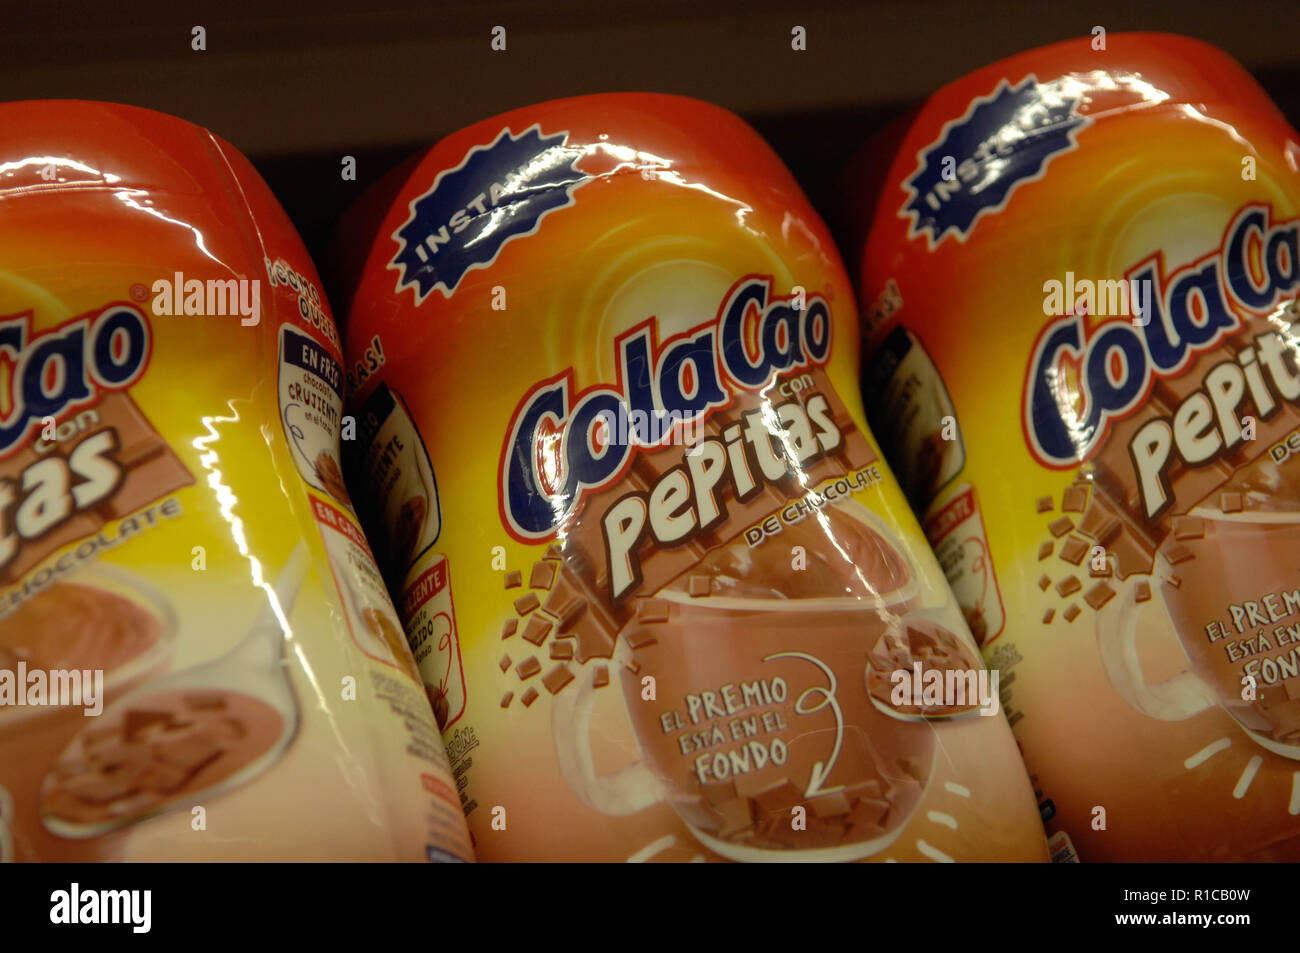 Cola Cao sugarless